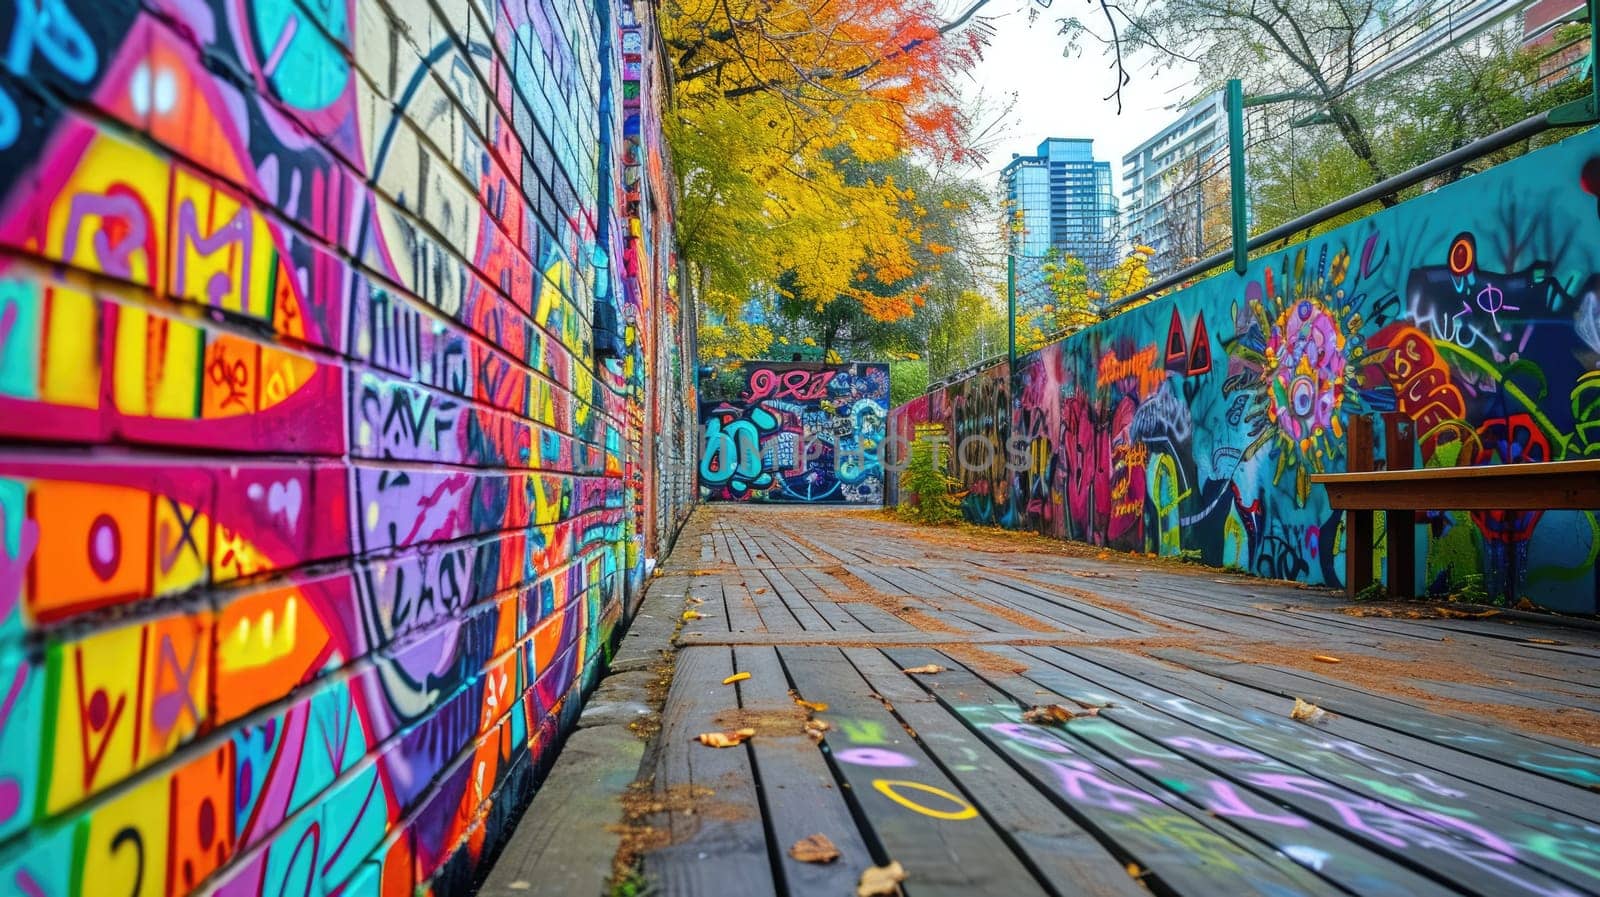 Vivid Graffiti Artwork of Eyes on Urban Wall. Resplendent. by biancoblue